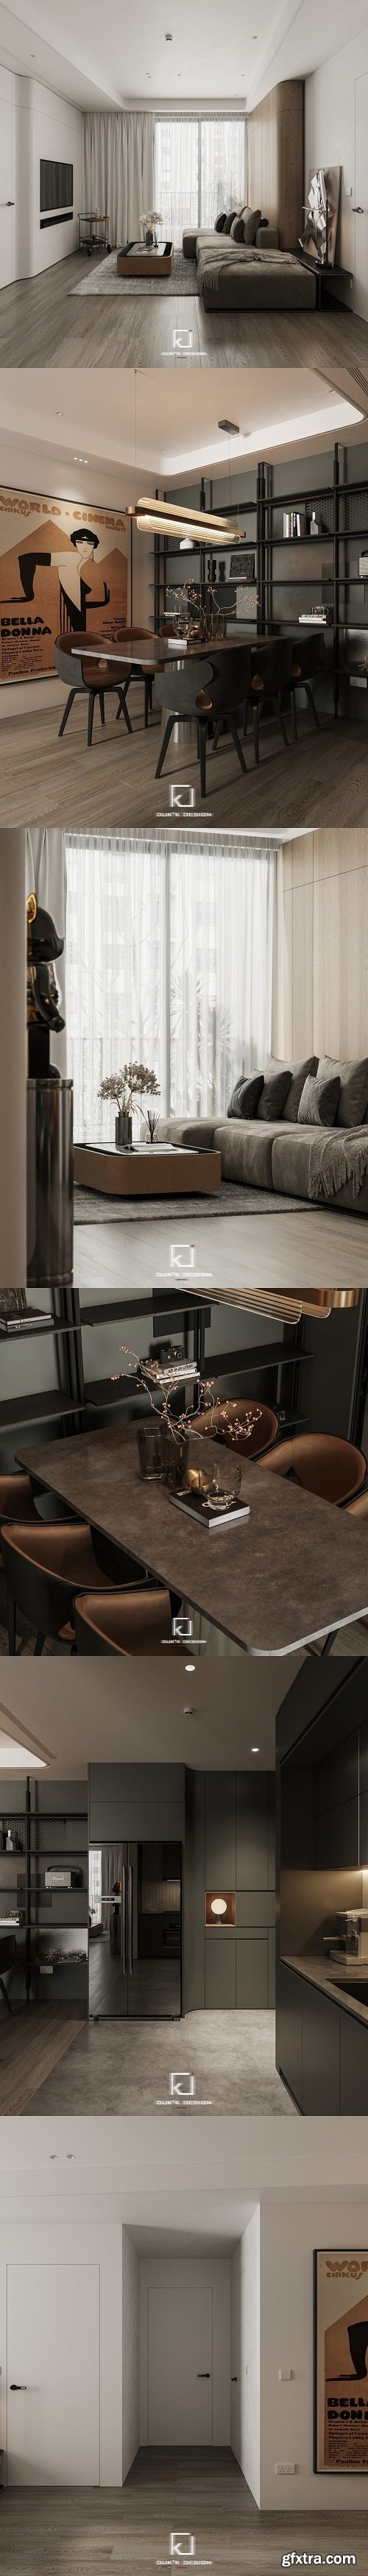 Living Room – Kitchen Interior By Dong Dao Vuong